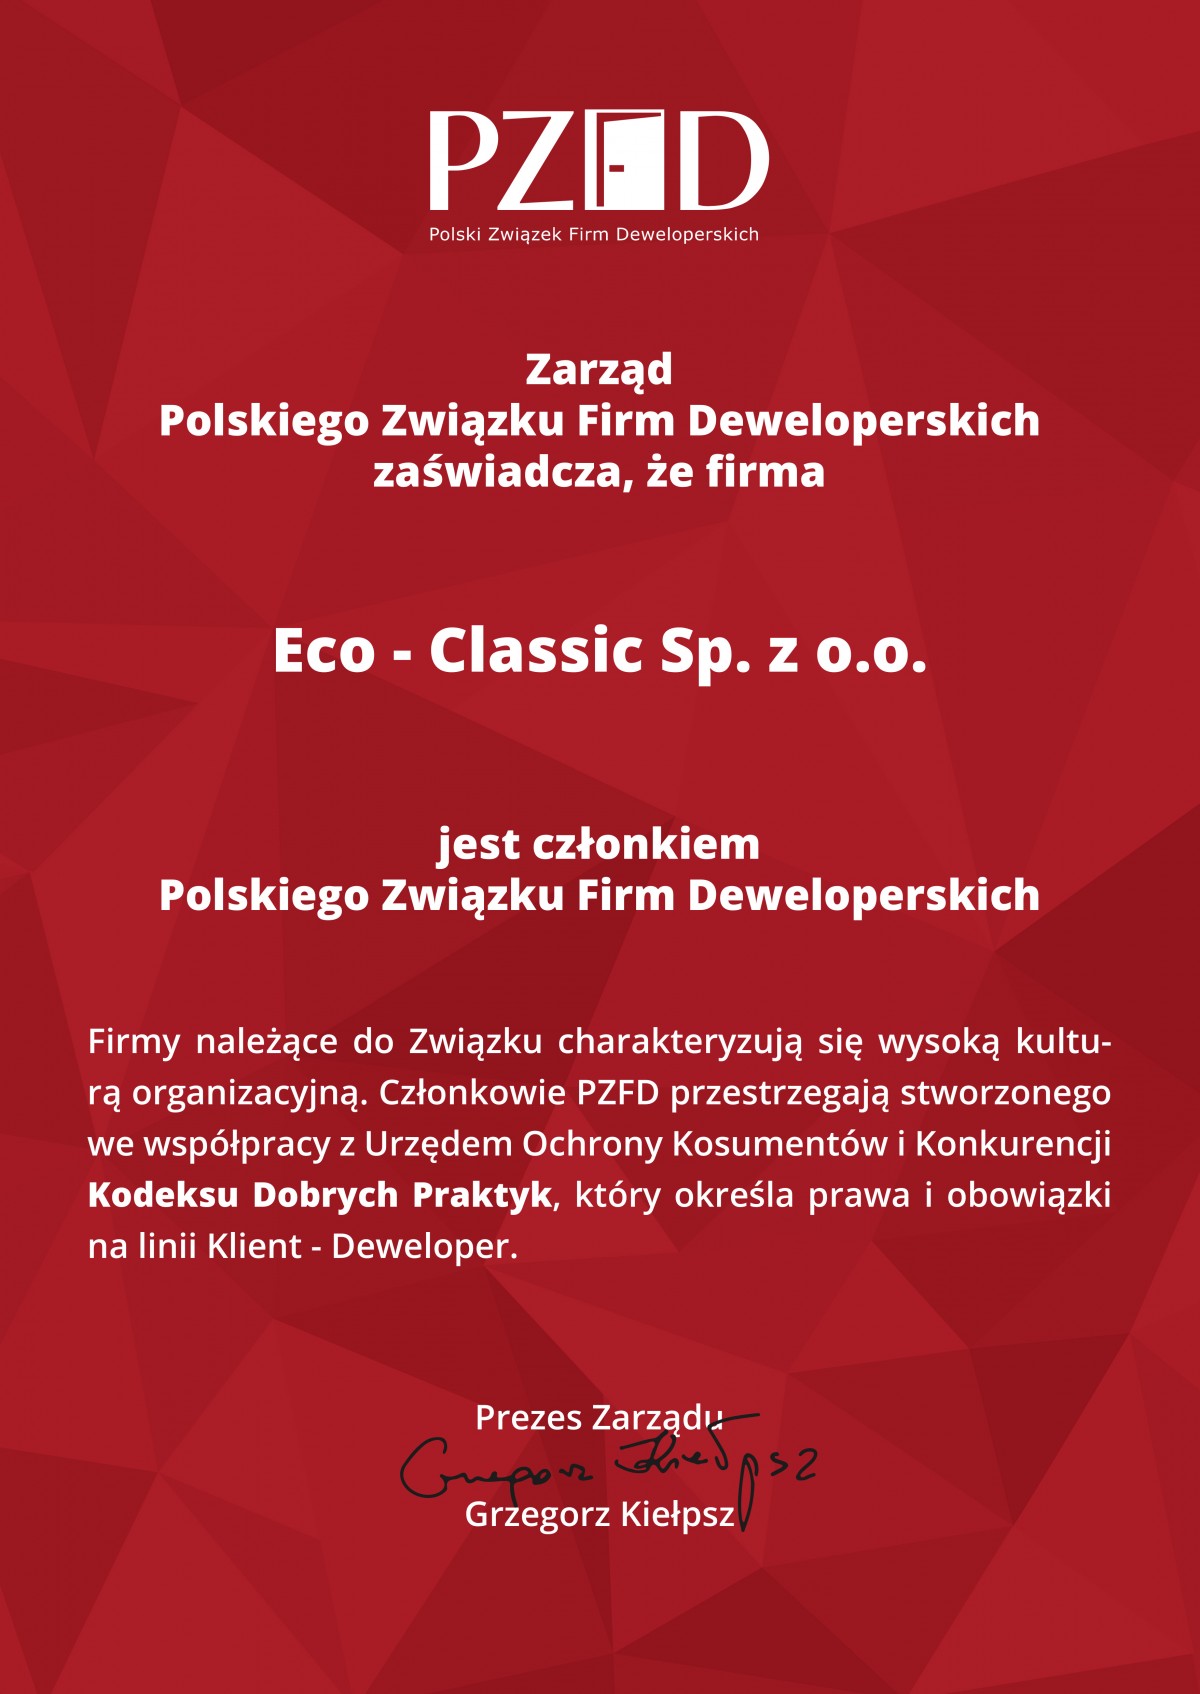 Polski Związek Firm Deweloperskich [Polish Association of Property Developers]